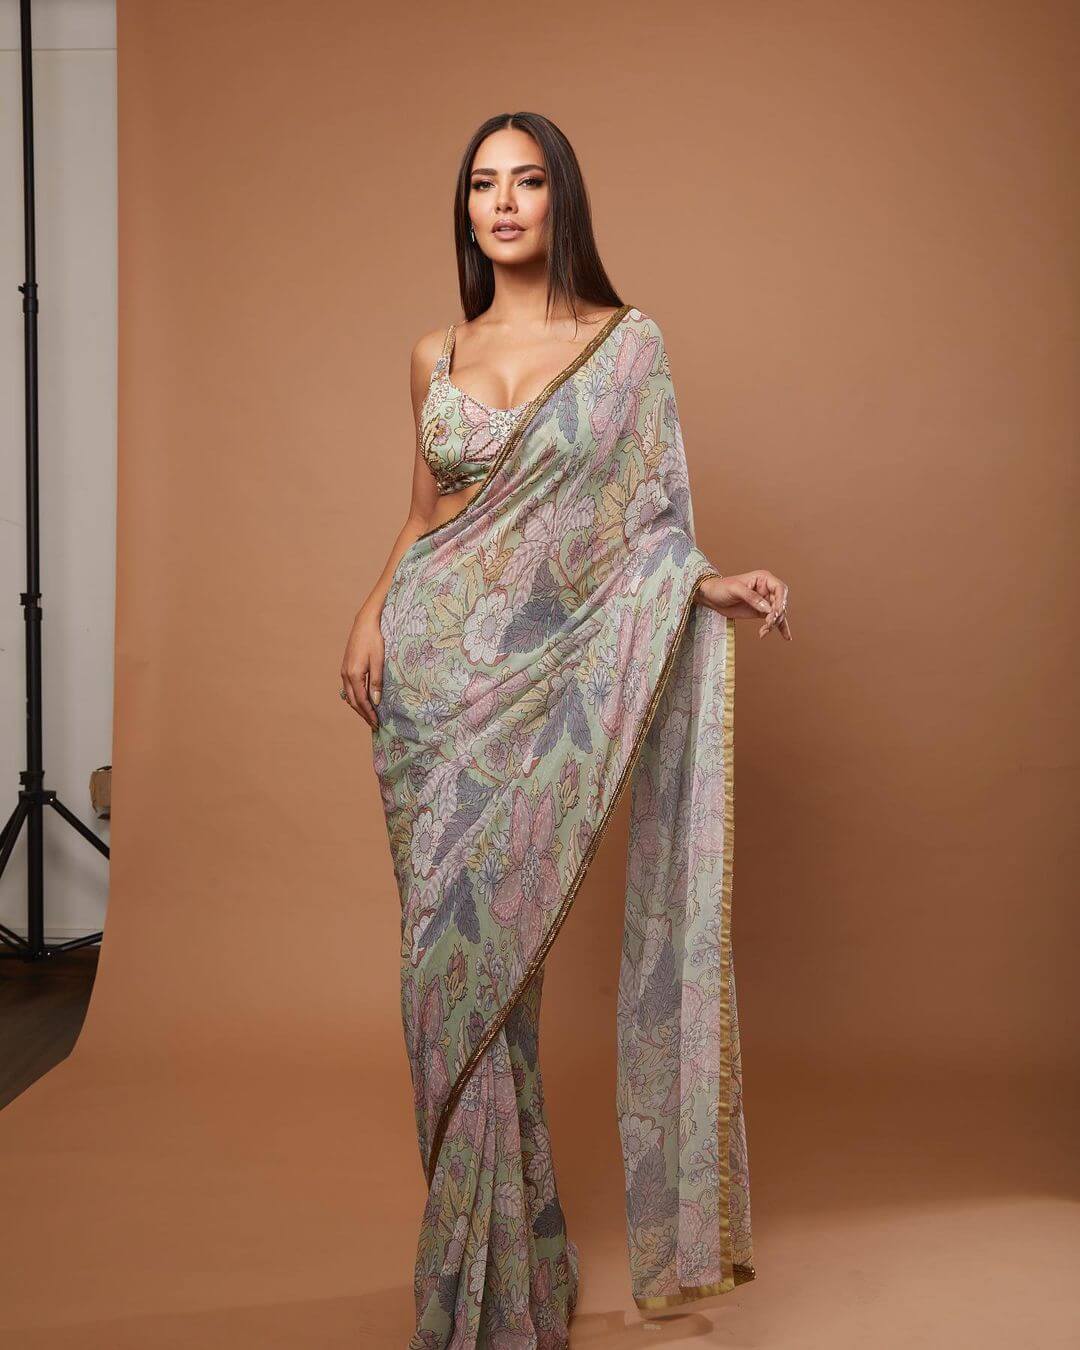 Esha Gupta's Simple and Elegant Saree Look